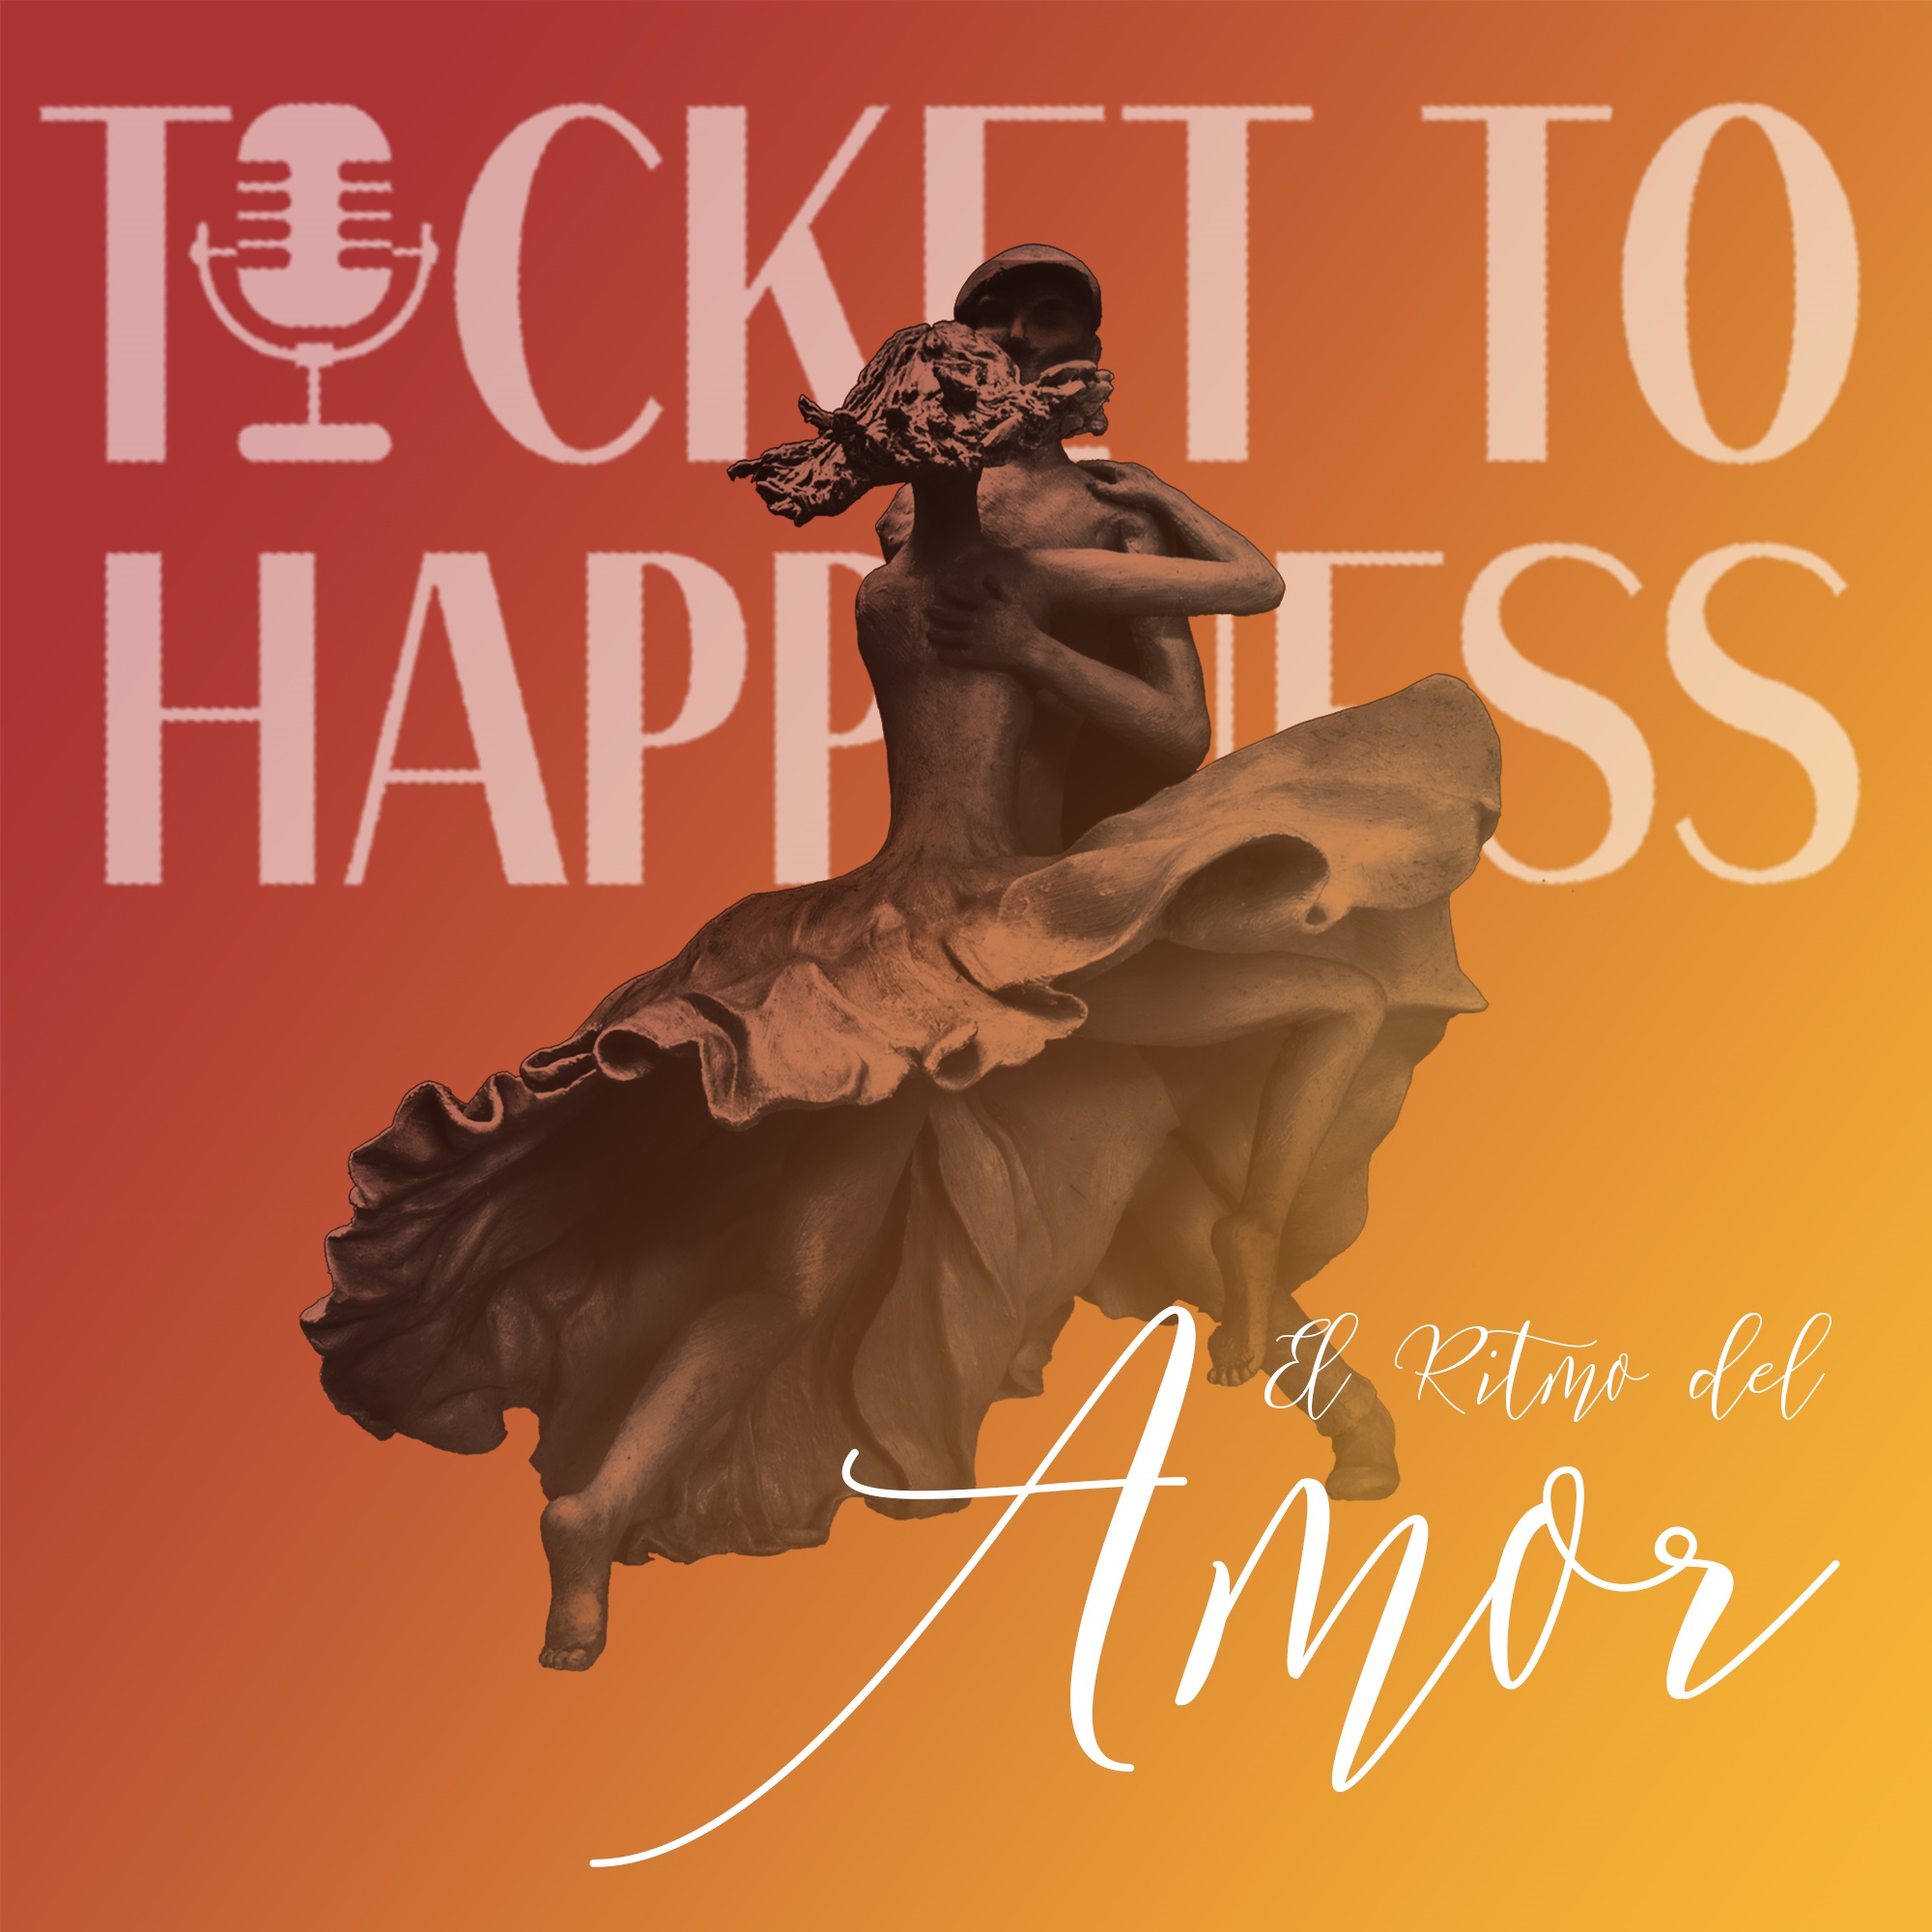 El Ritmo del Amor - Cover - Ticket to Happiness - Single - Folk - Folk Rock - Folk Pop - Music - MP3 Download